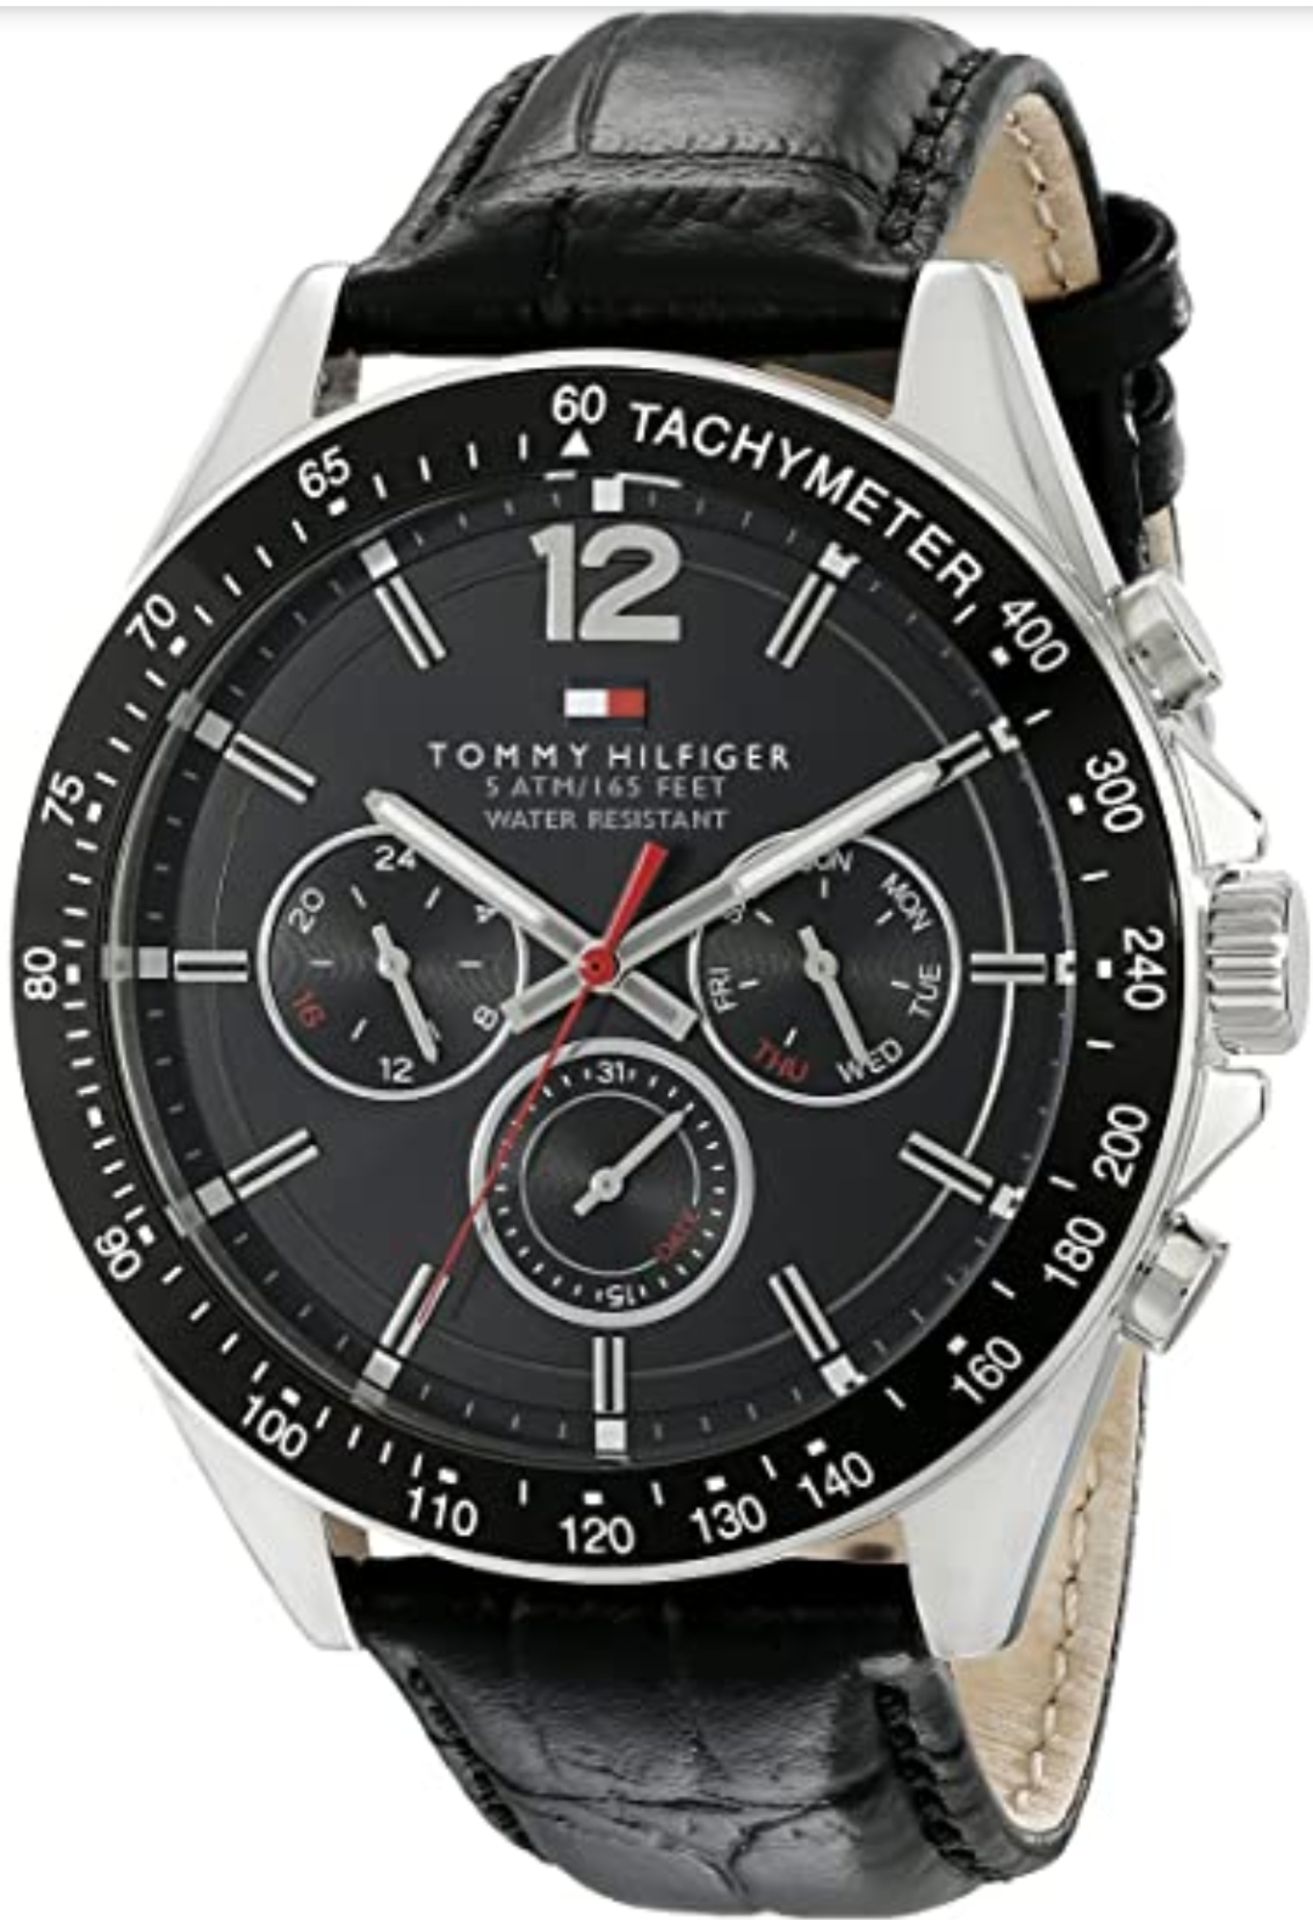 Men's Tommy Hilfiger Multi-Function Leather Strap Watch 1791117æ Men's Tommy Hilfiger Watch - Image 2 of 5